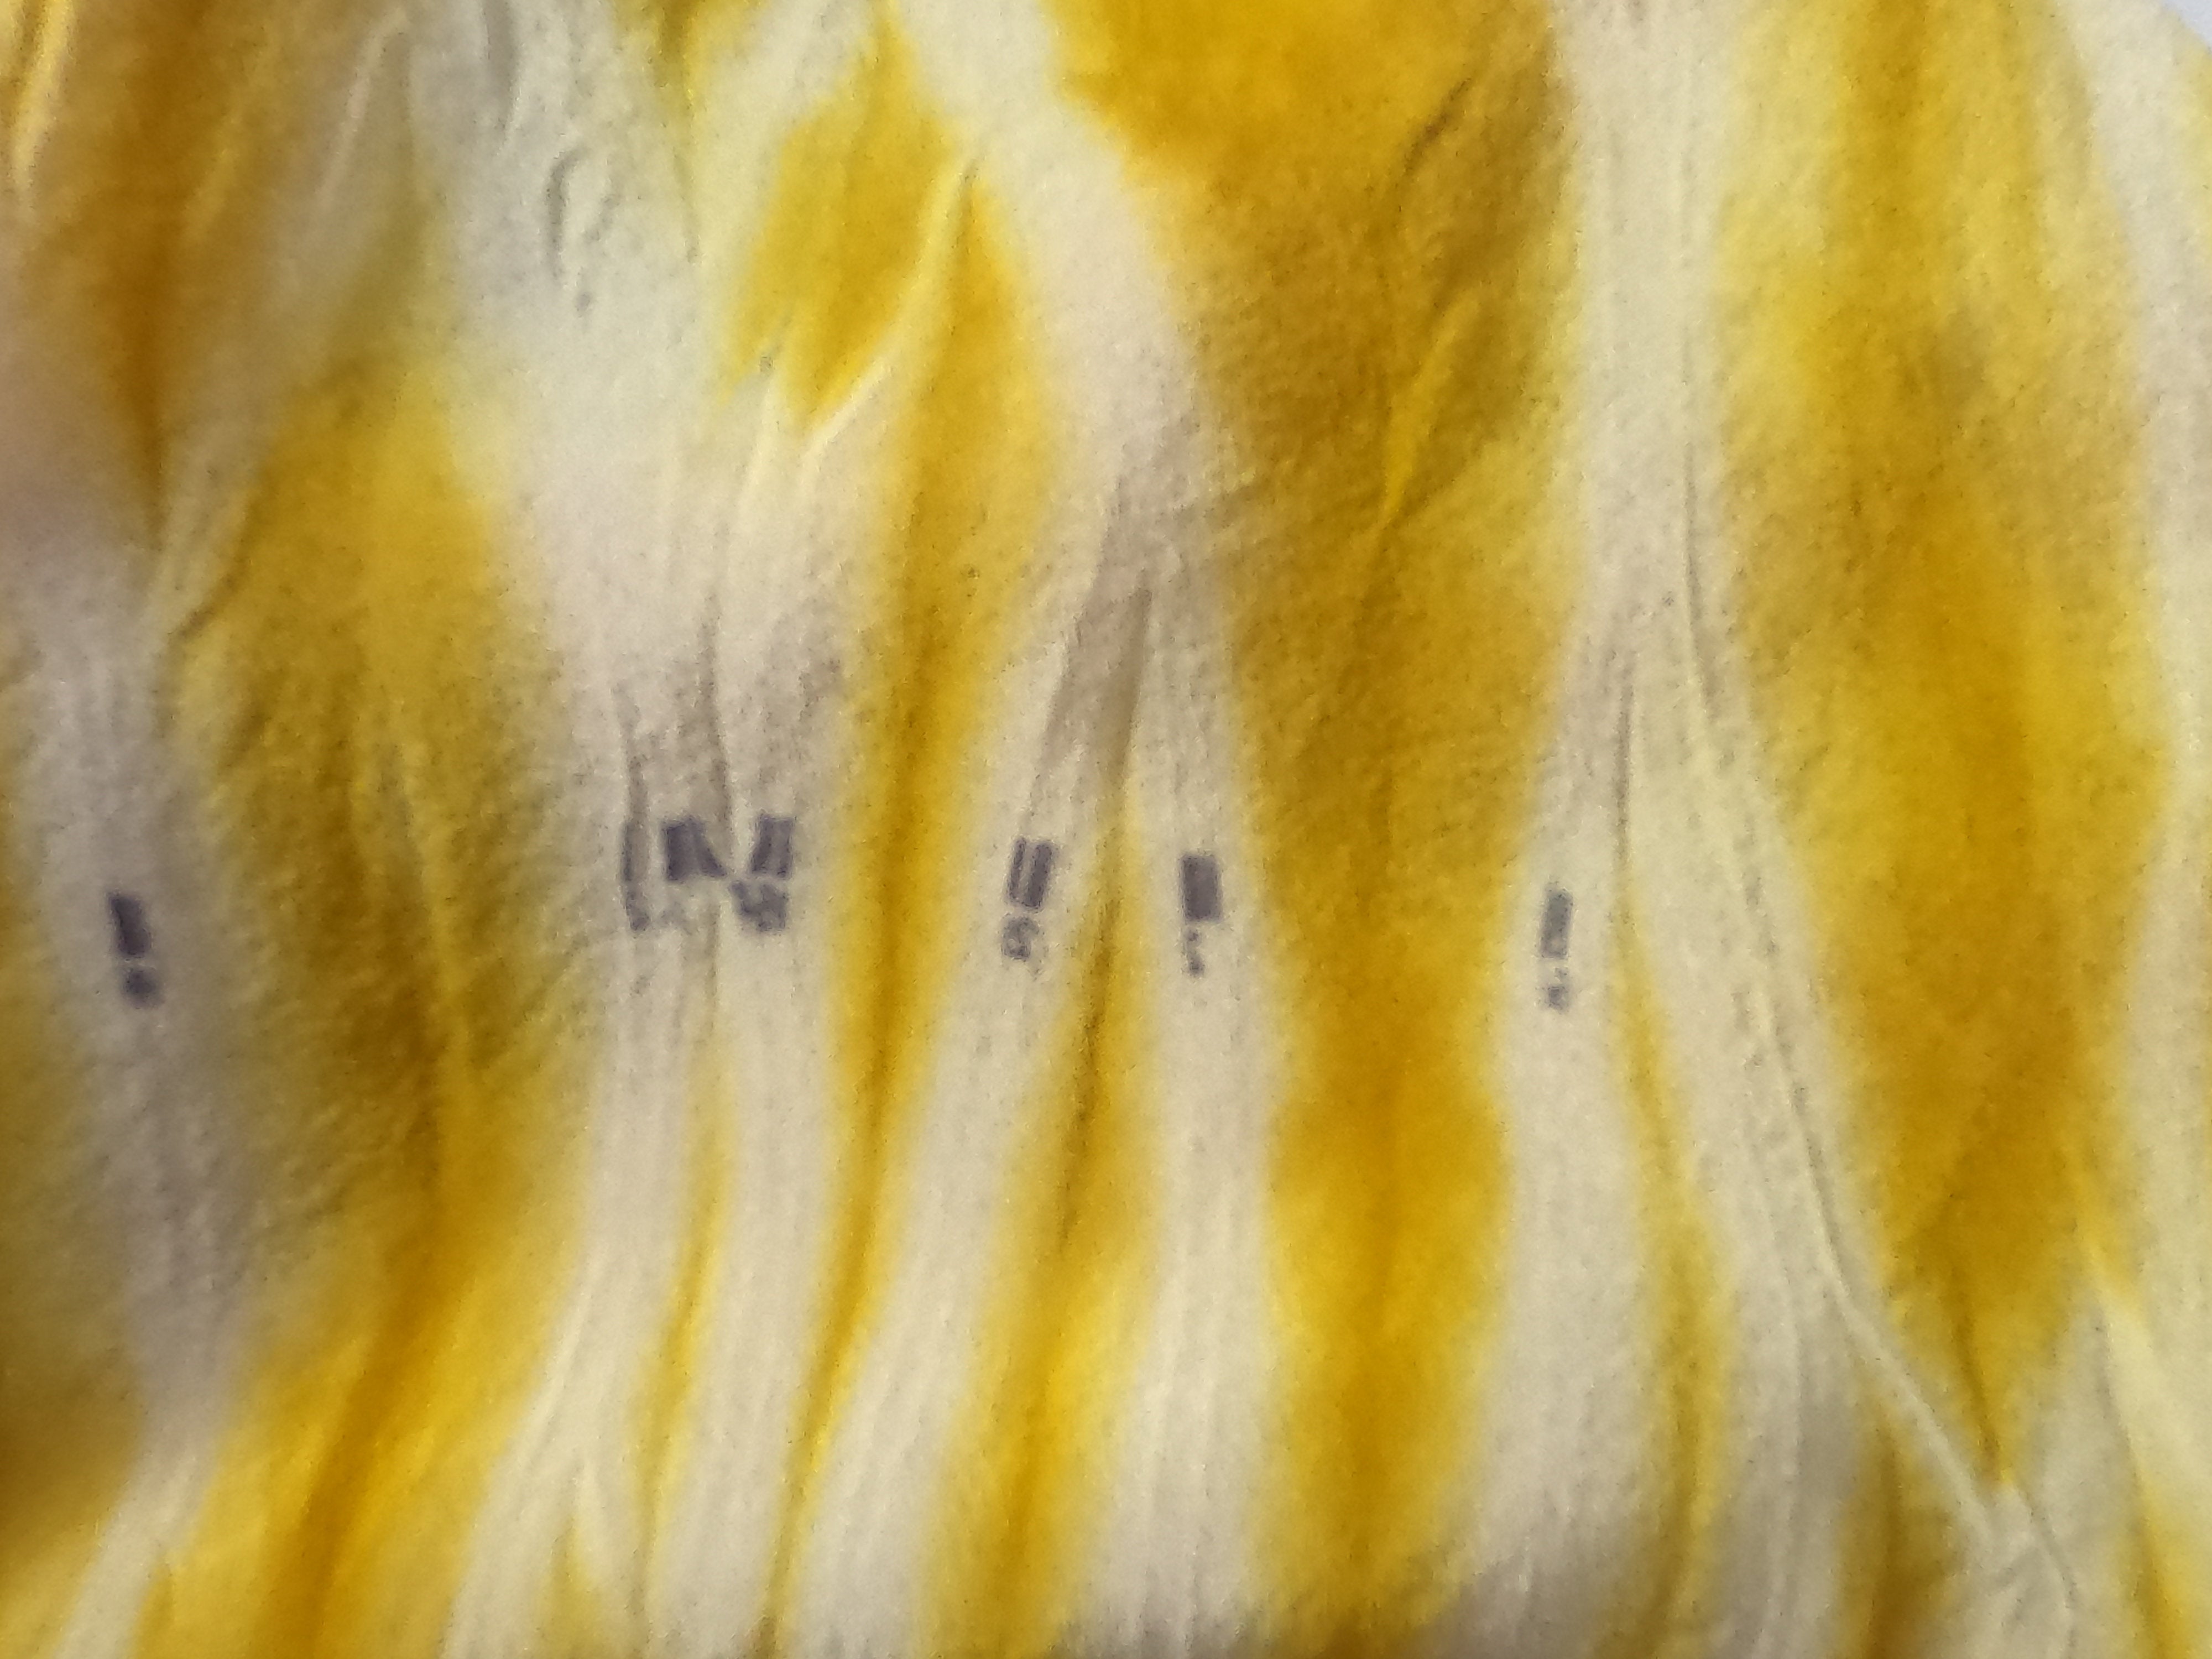 SECOND (Has print flaw) Silk Hand dyed Shibori shawl- Yellow